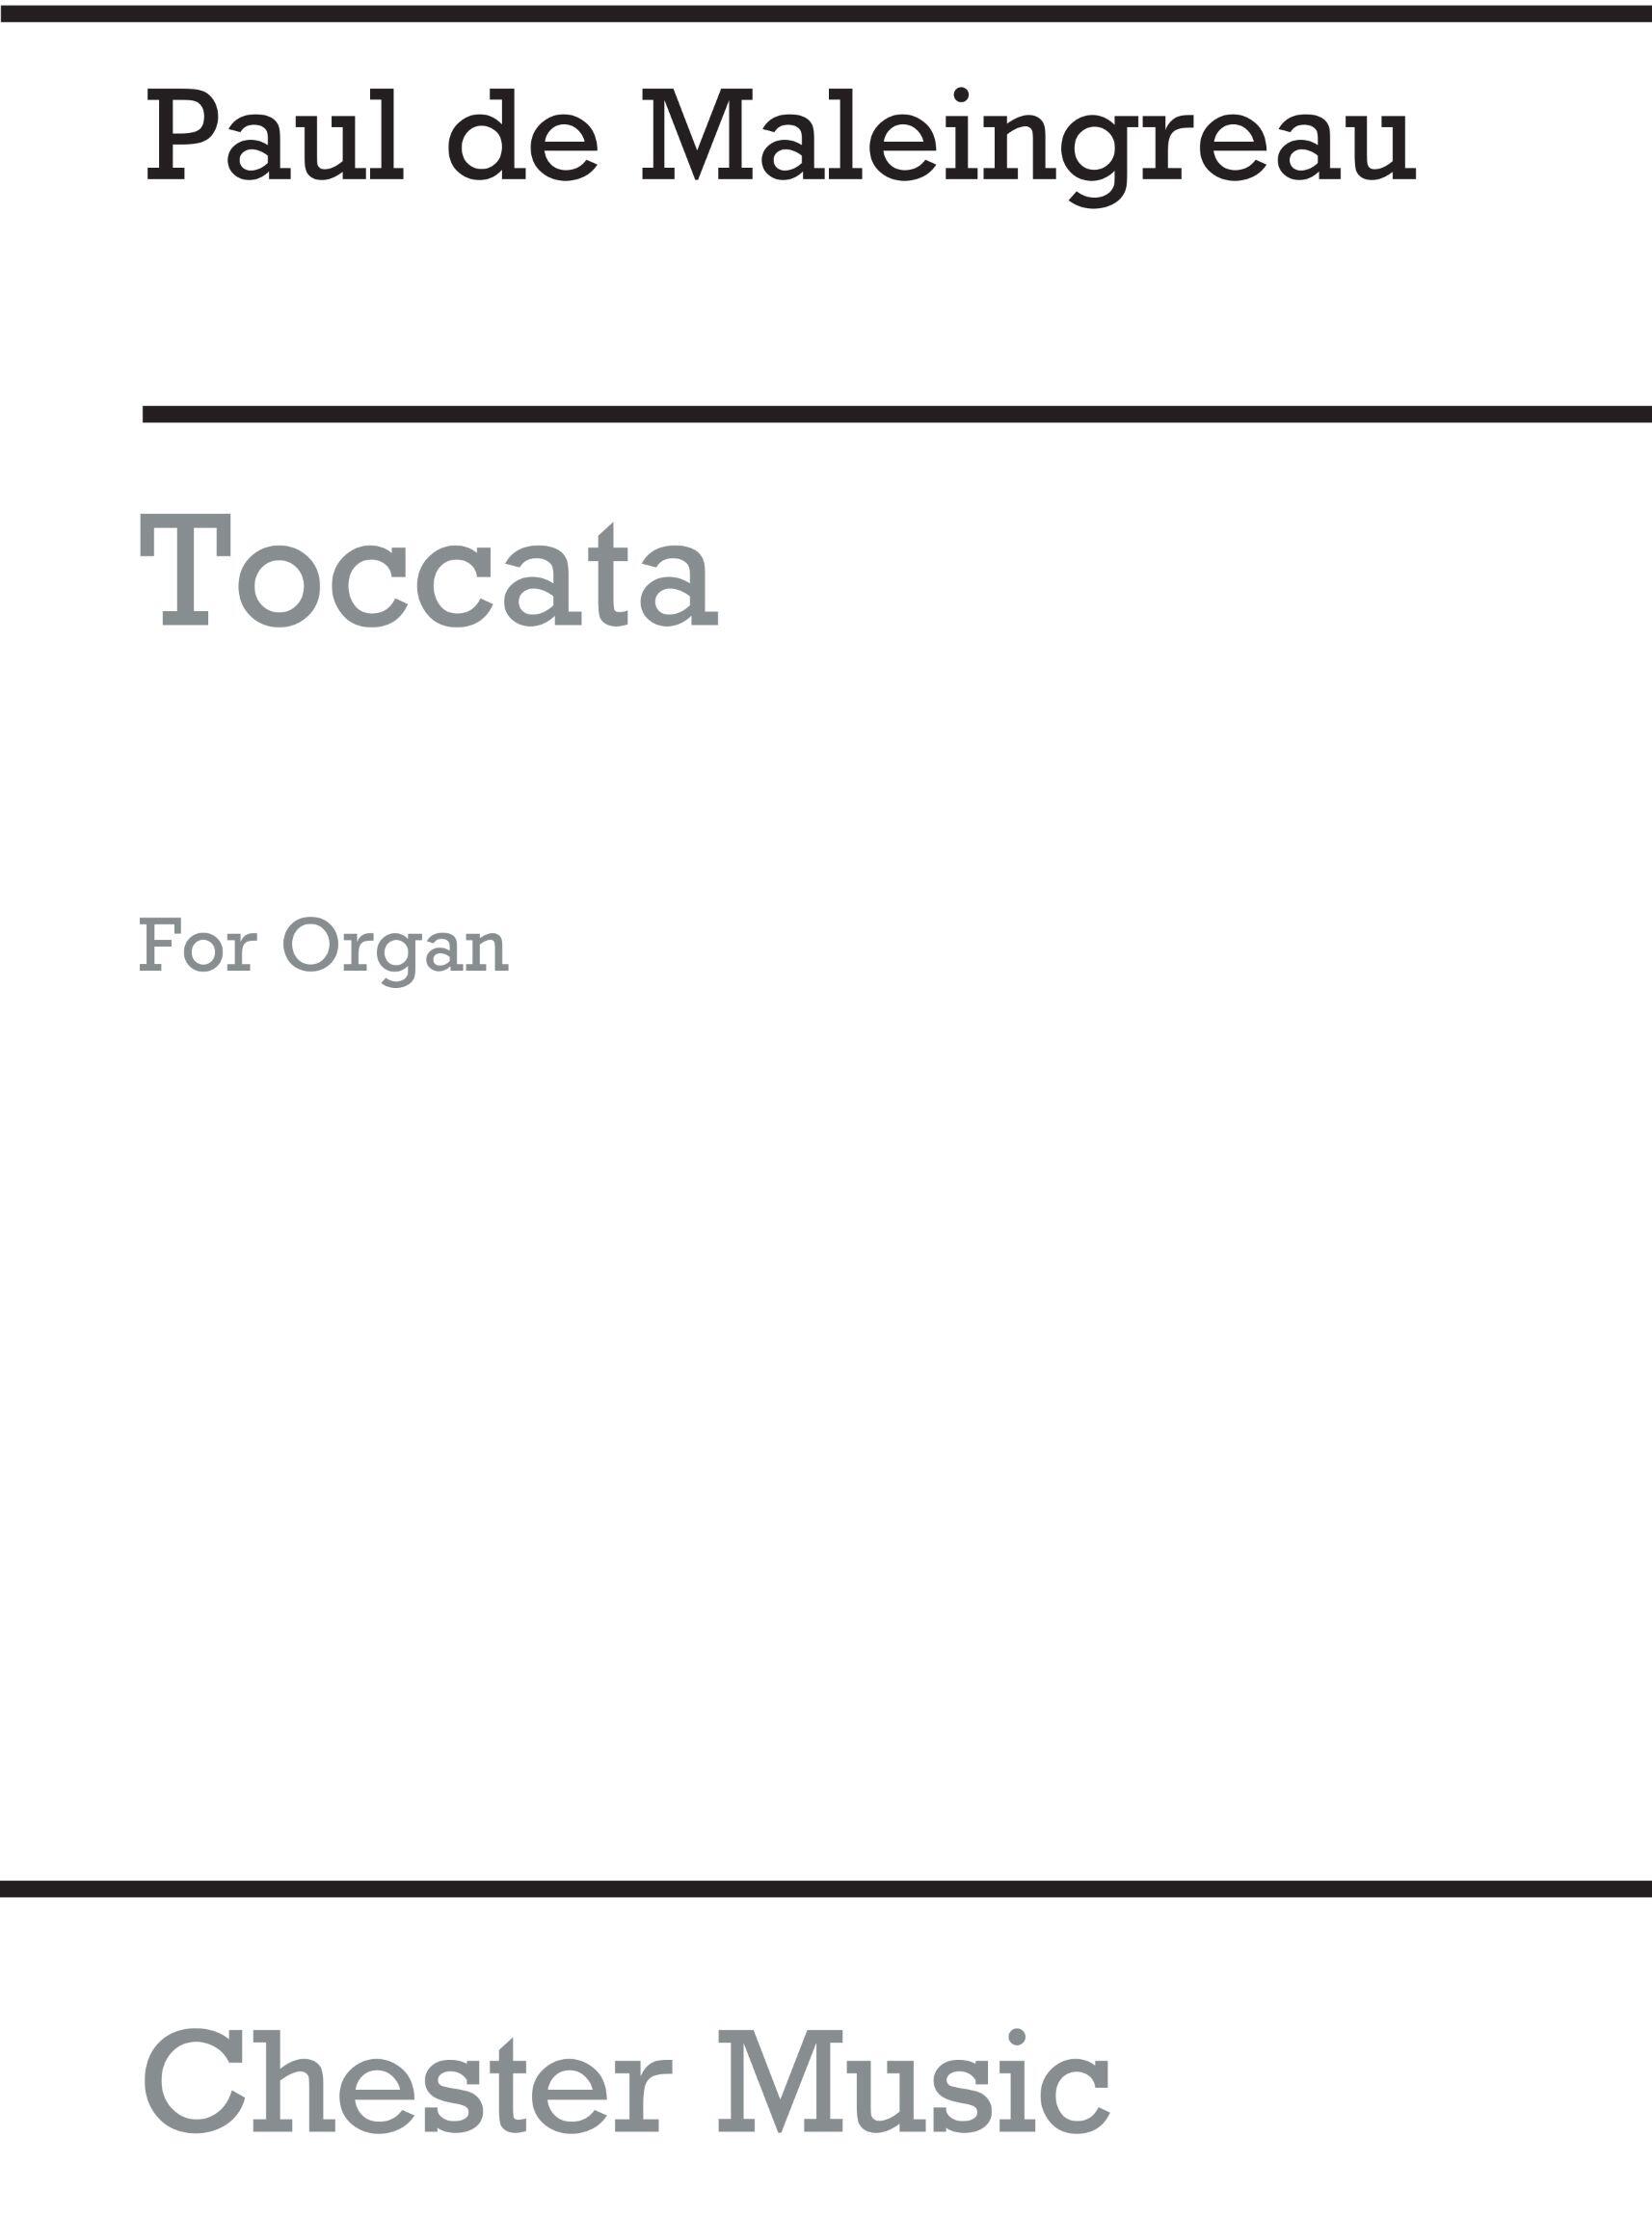 Toccata- Offrande Musicale Op.18 No.3 : photo 1